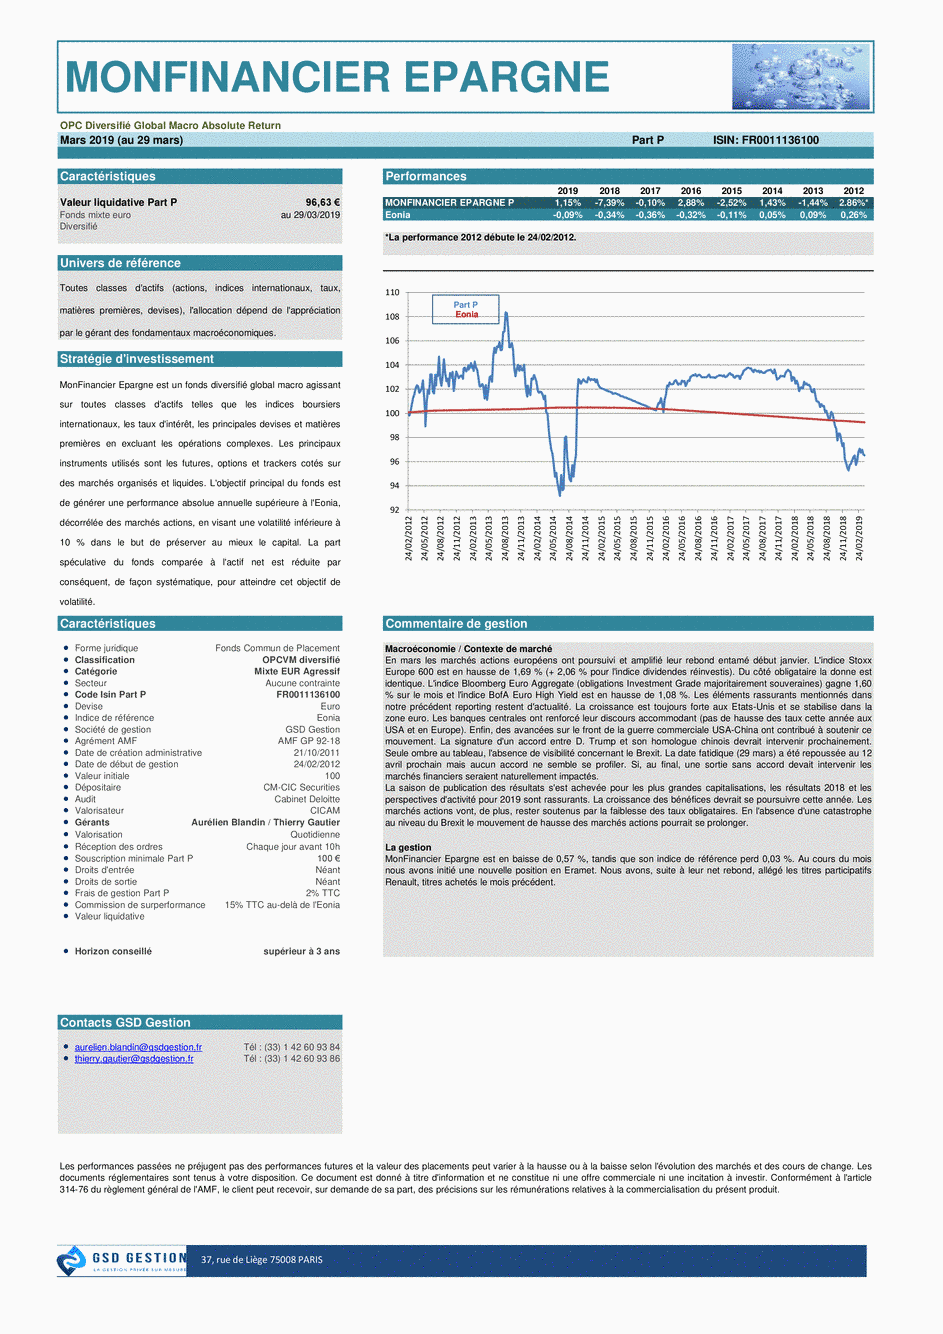 Reporting Monfinancier Epargne P - 08/04/2019 - undefined